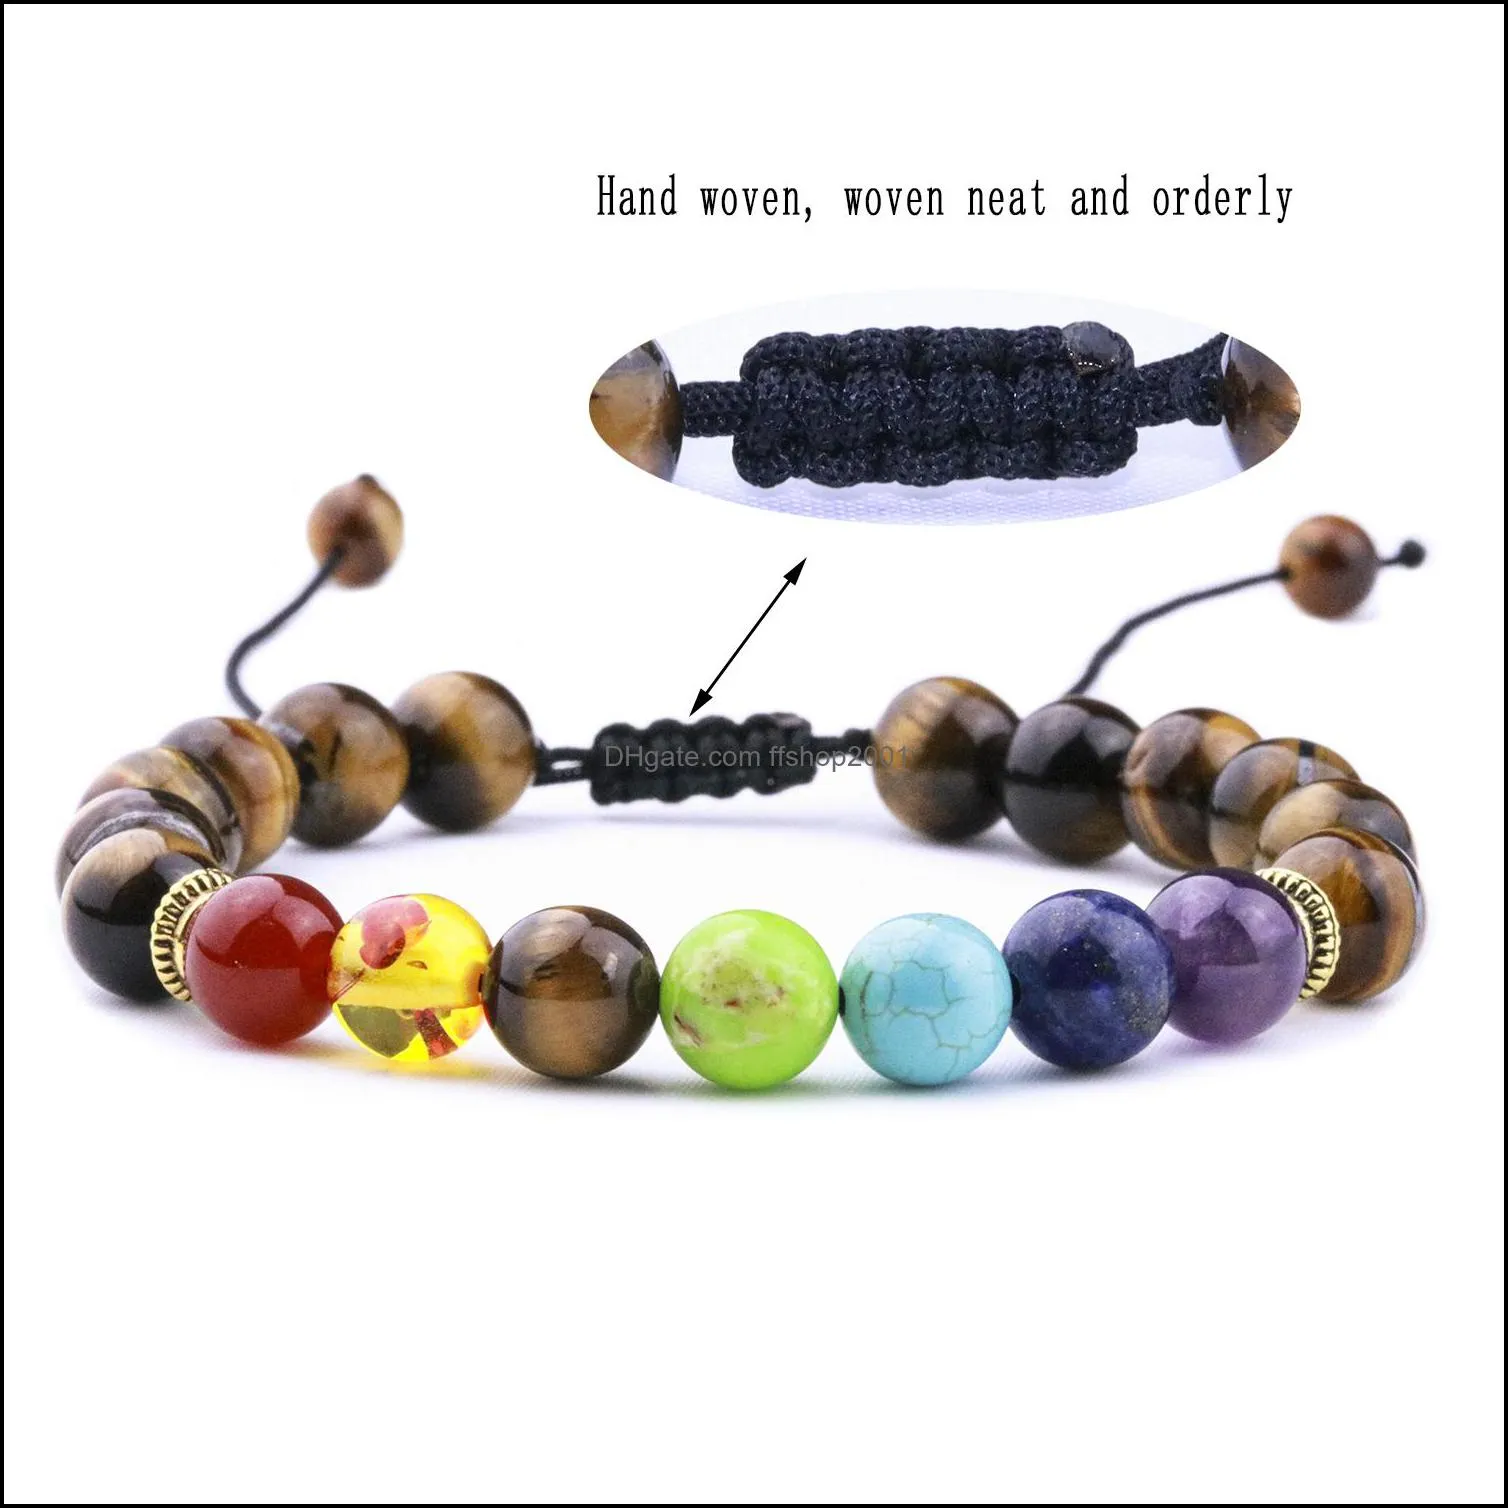 8mm natural stone tigers eye 7 chakras bead bracelets diy healing balance beads reiki bracelet for women men friend jewelry